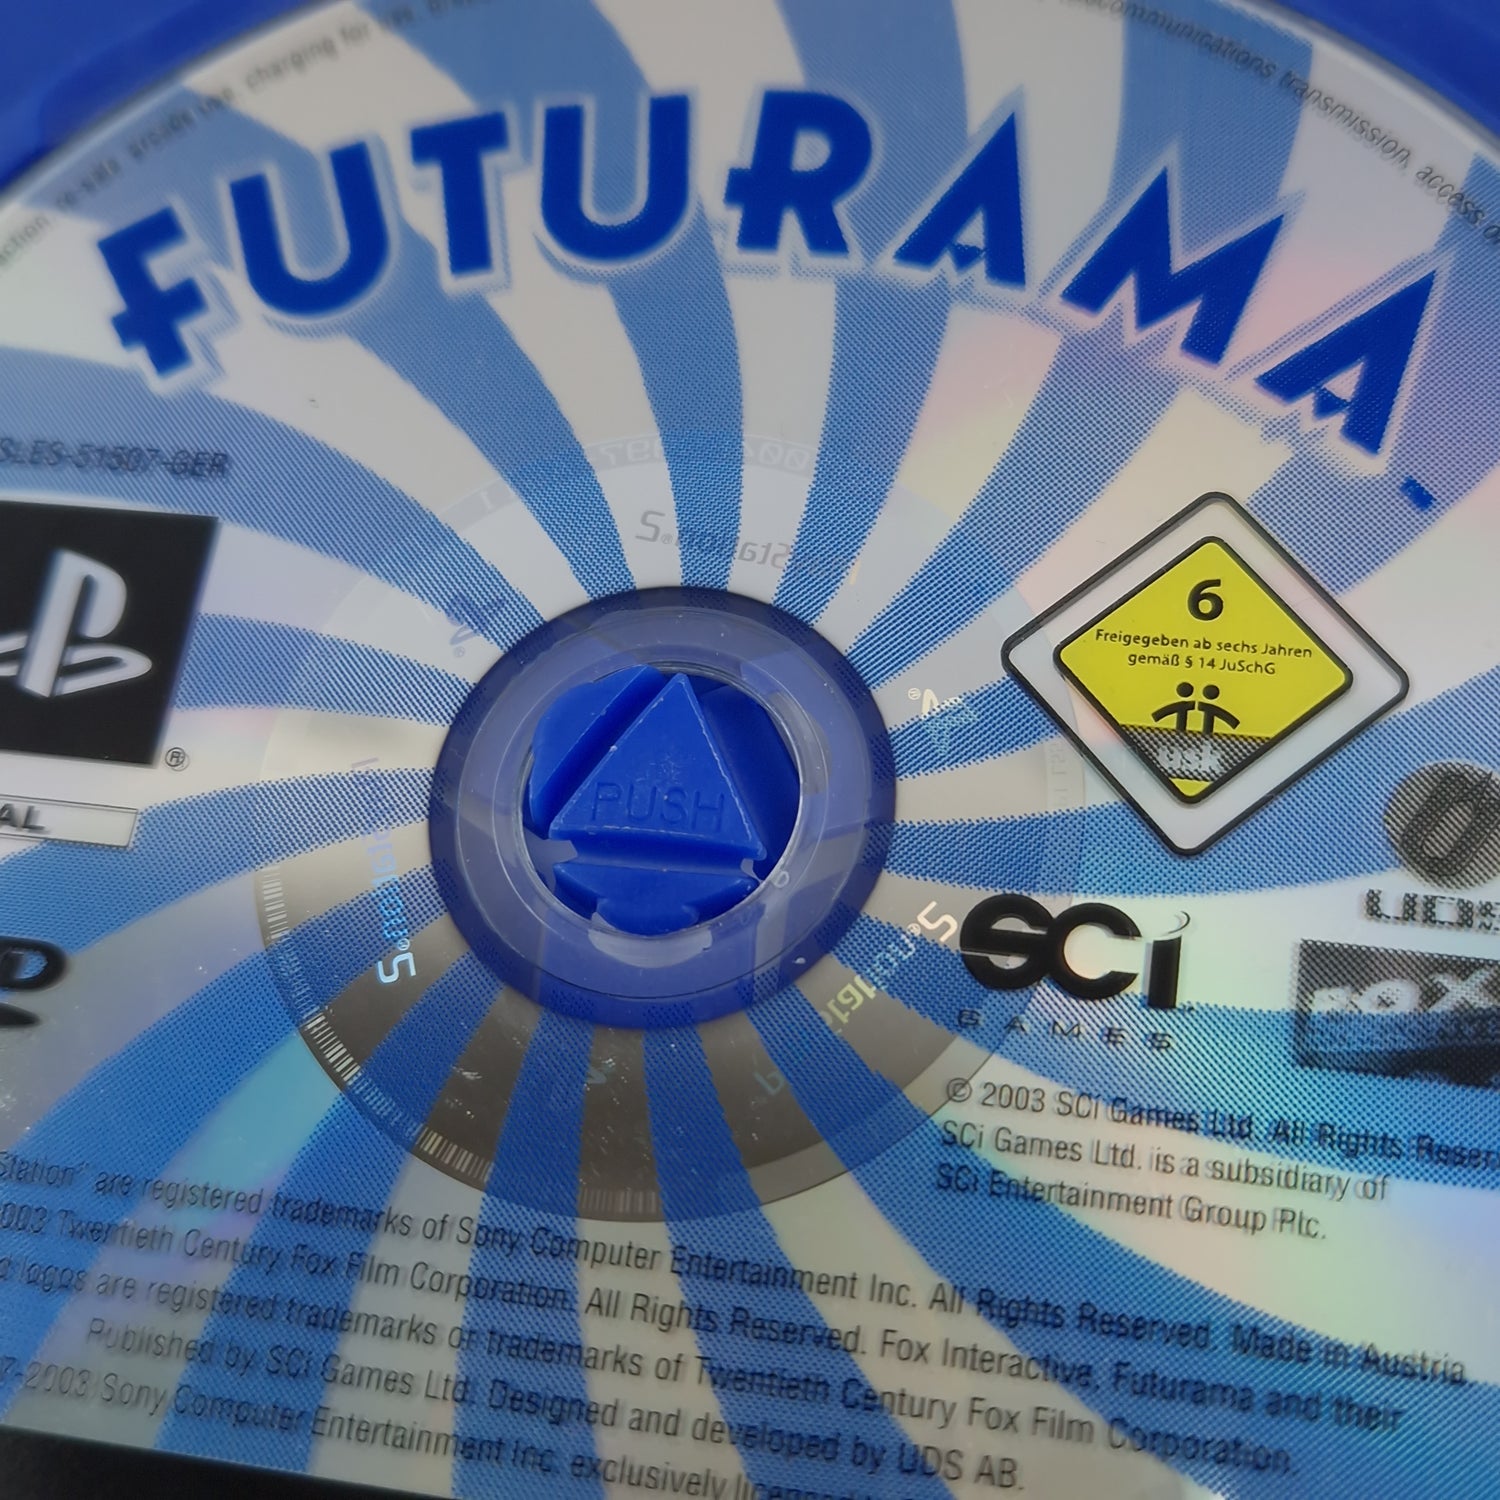 Playstation 2 Spiel : Futurama - OVP Anleitung CD | Sony PS2